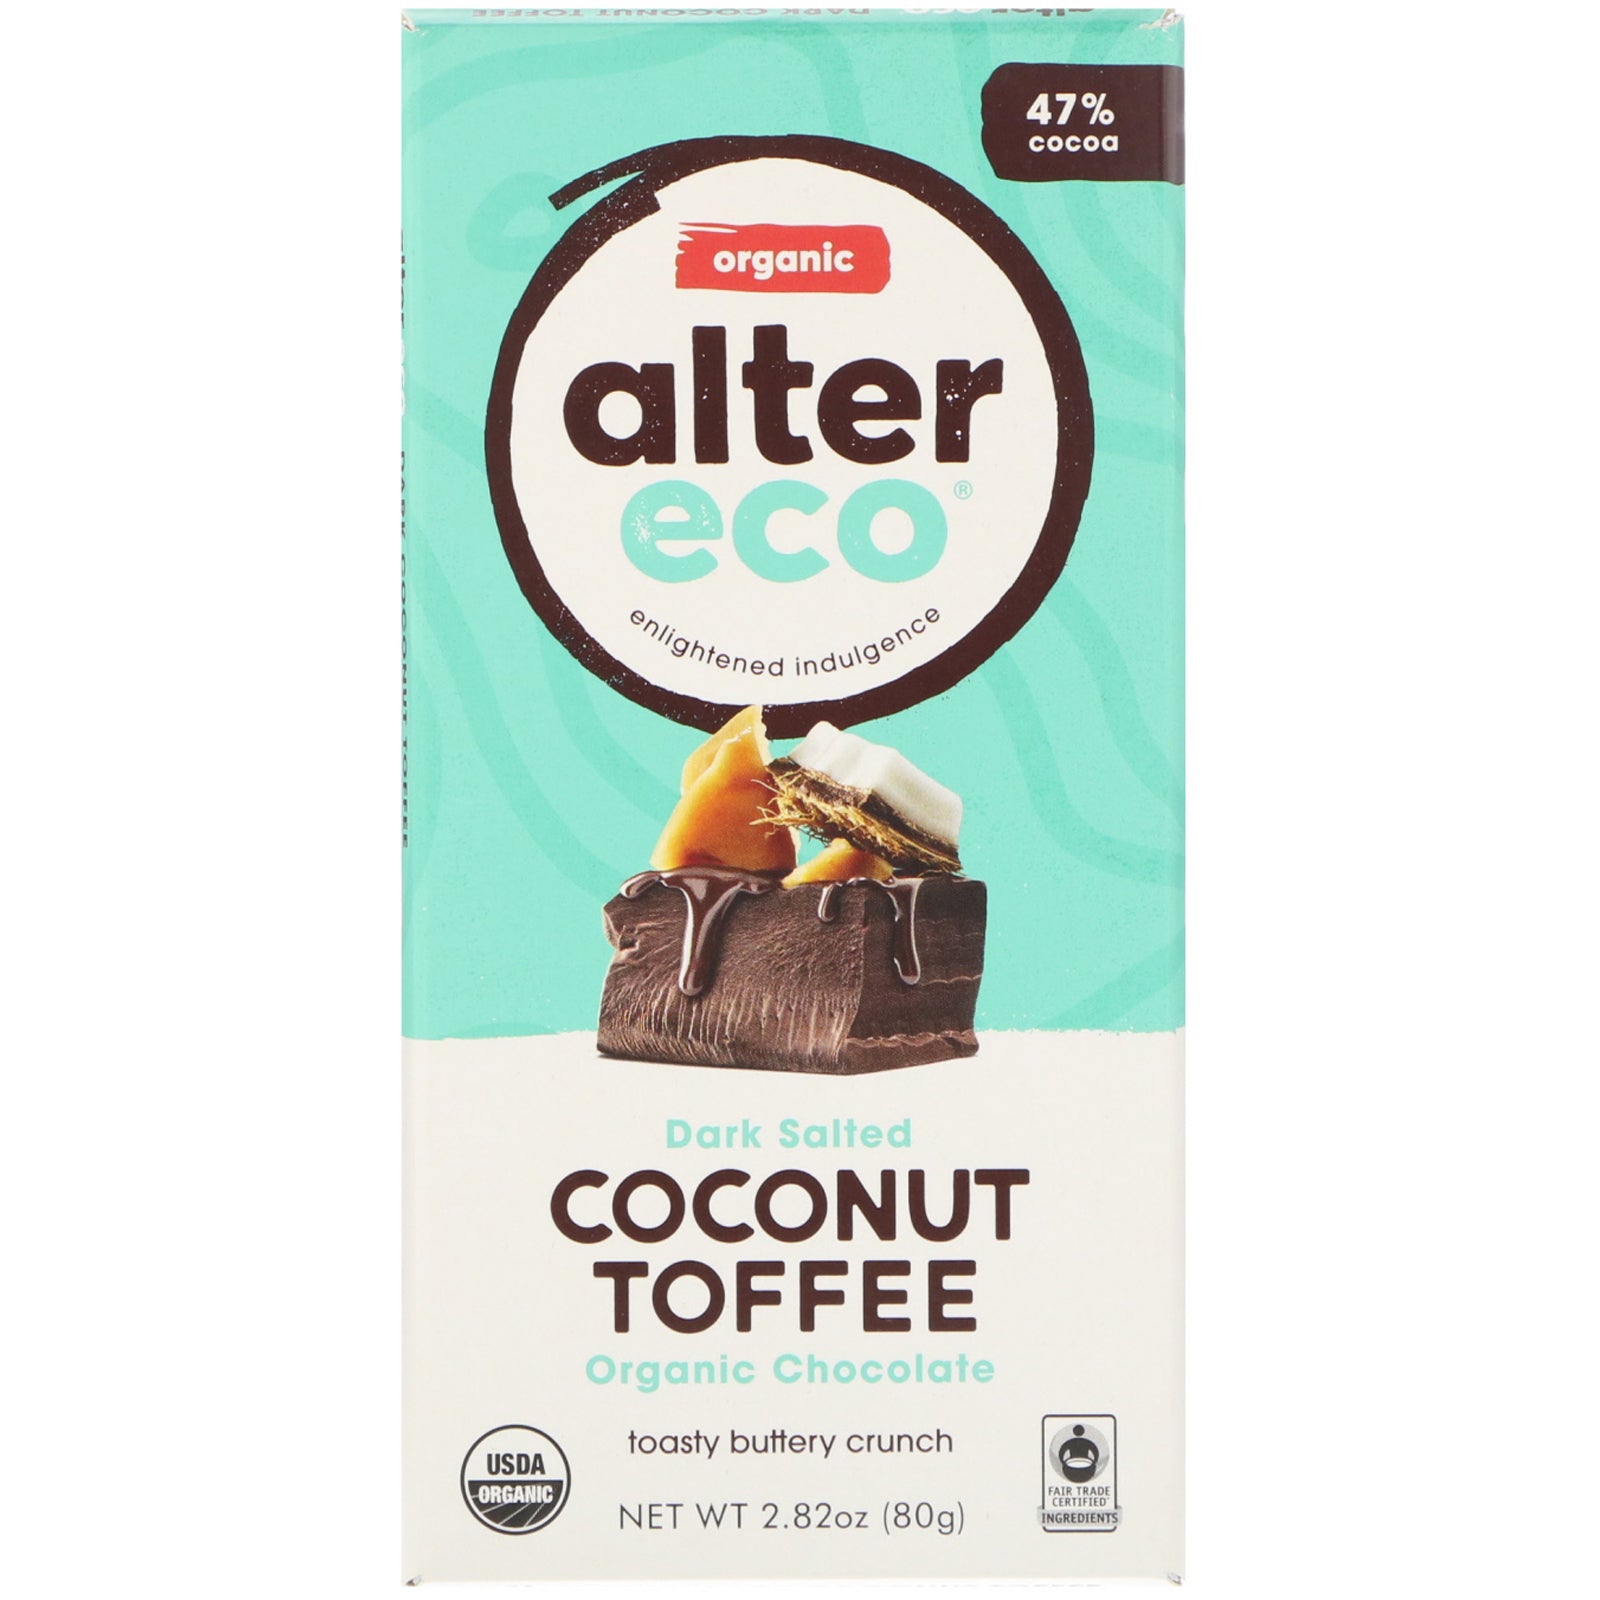 Alter Eco, Organic Chocolate Bar, Dark Salted Coconut Toffee, 47% Cocoa, 2.82 oz (80 g)